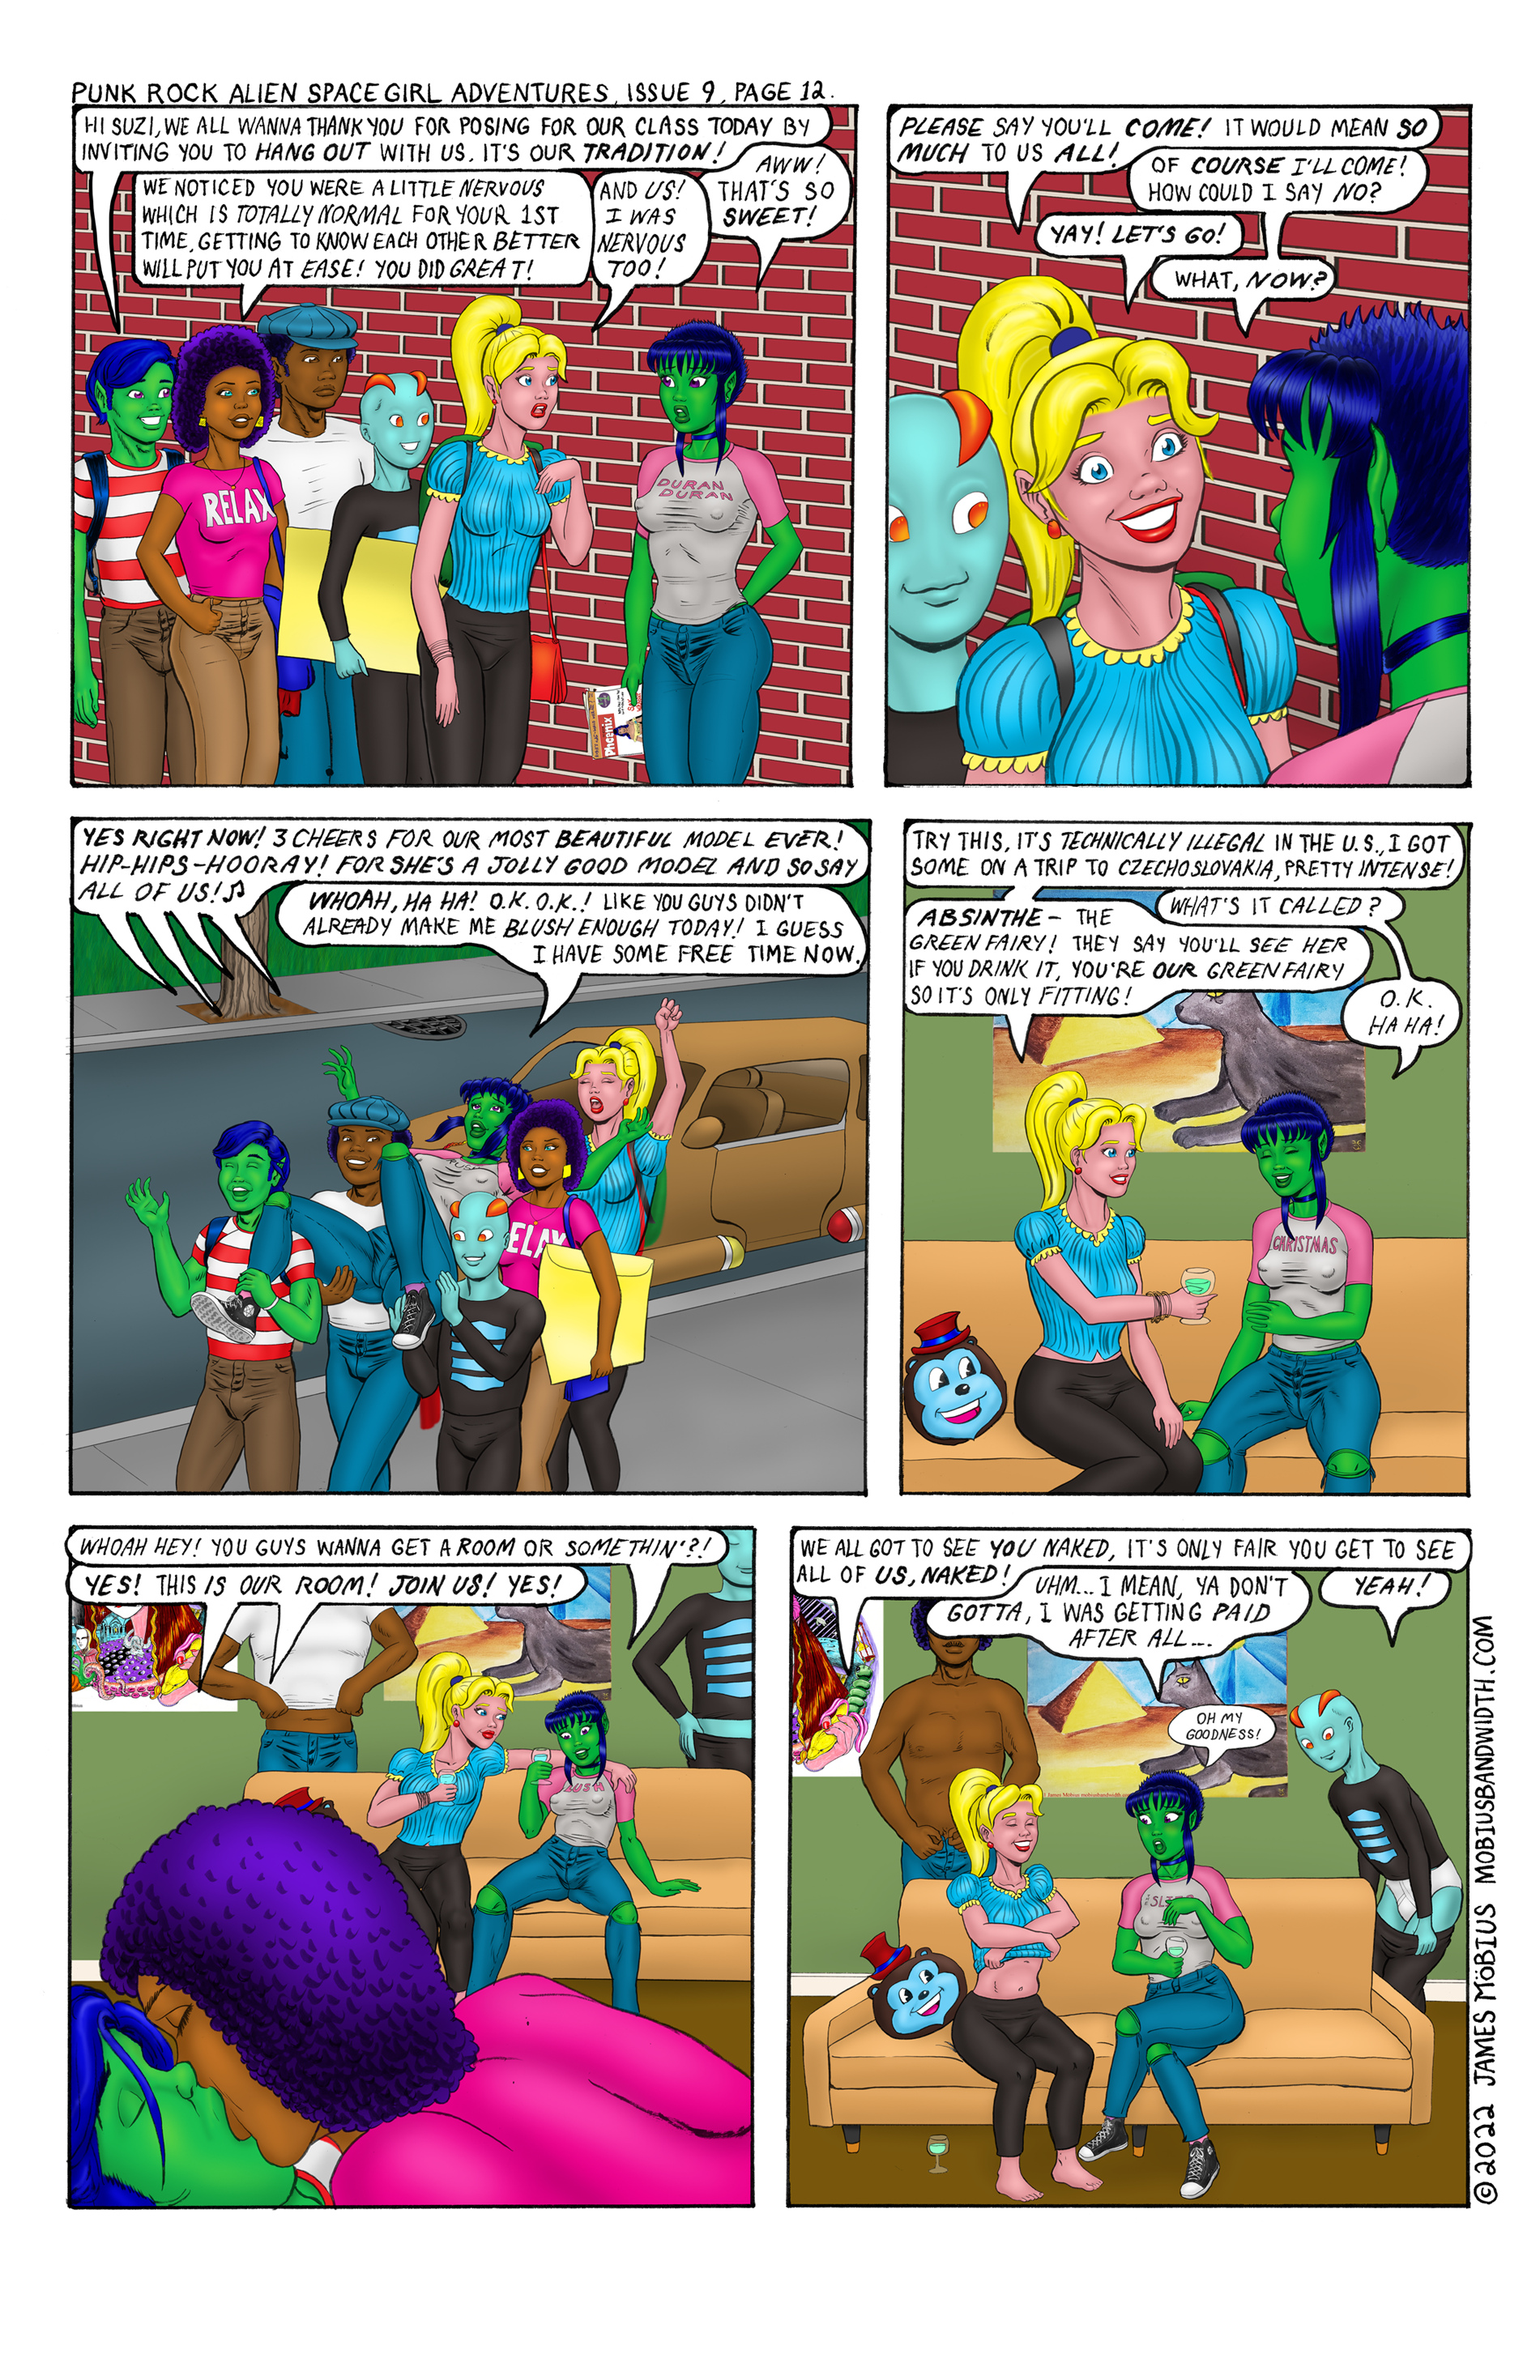 Prasga #9 page 12